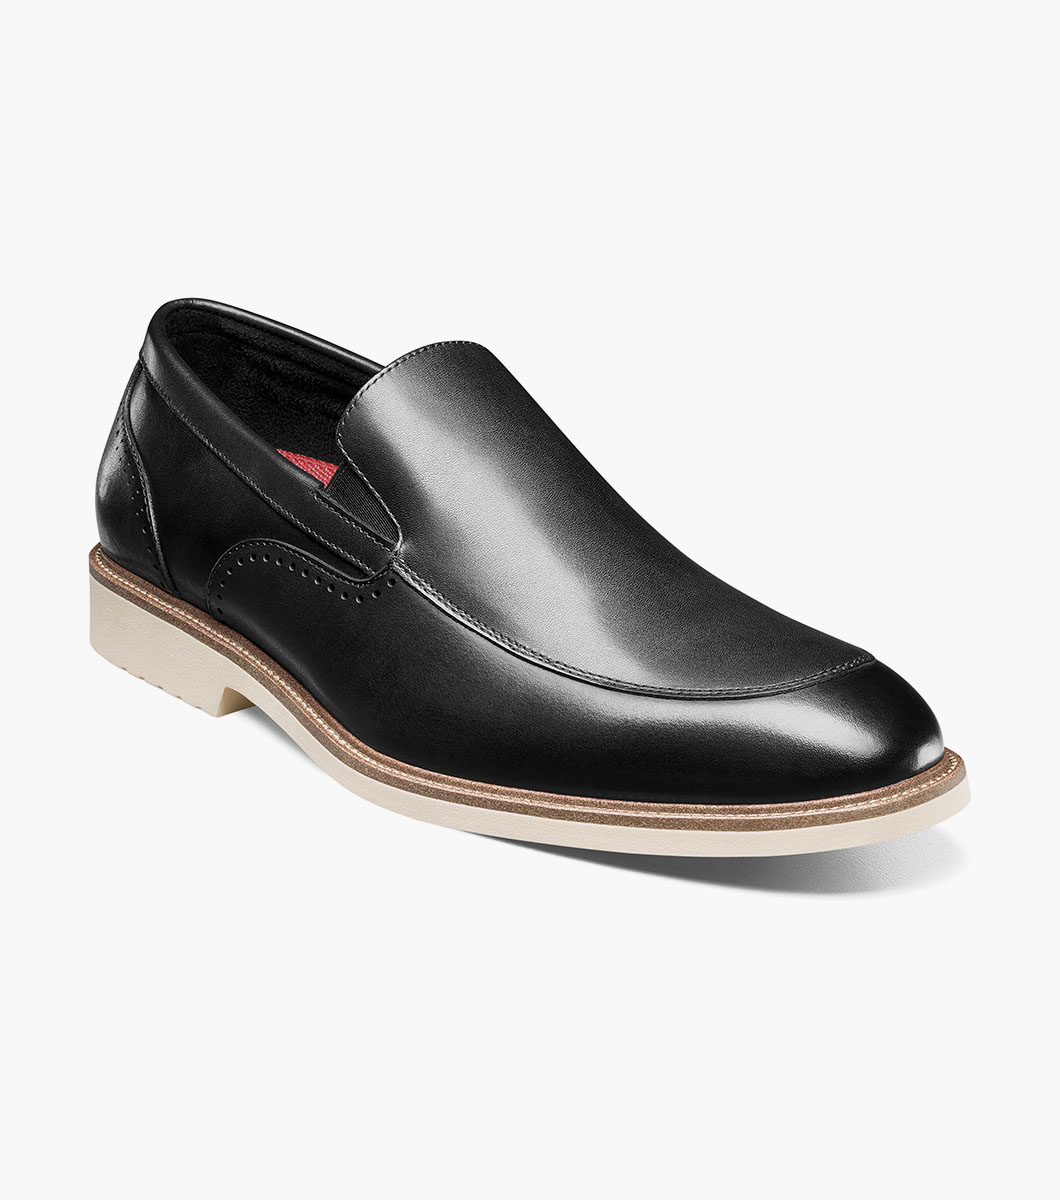 Stacy Adams Shoes Wellington Moc Toe Slip On Black Size 9.5